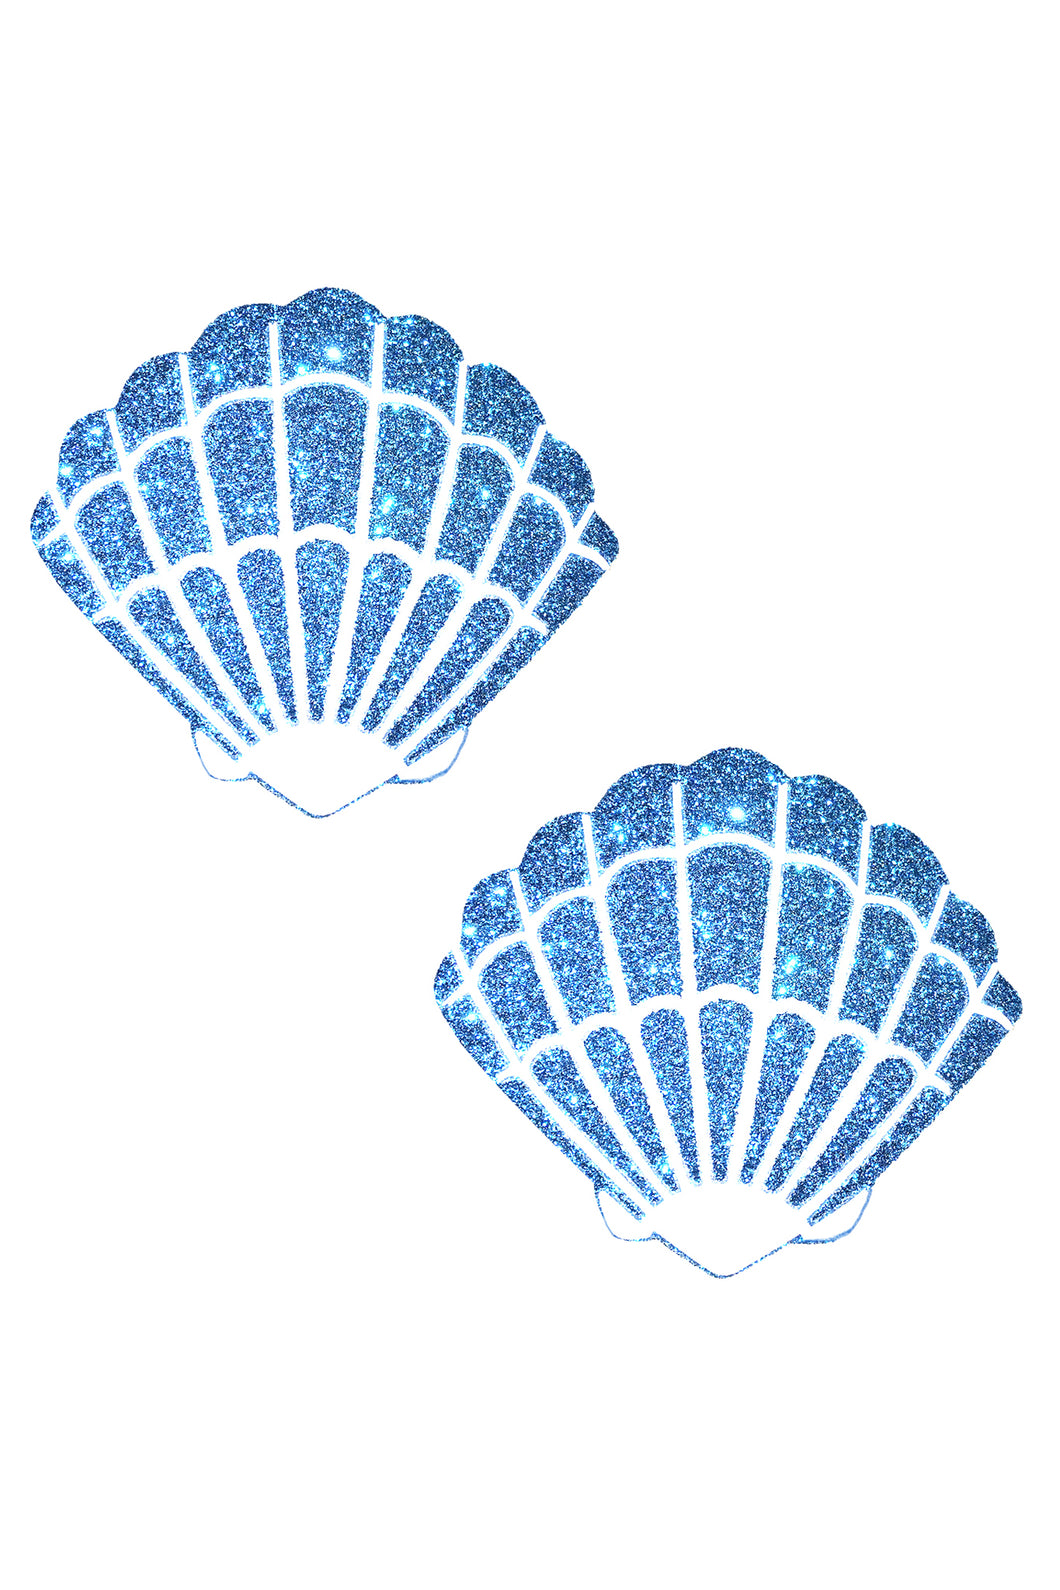 Bowie Blue Glitter Mermaid Shell Pasties